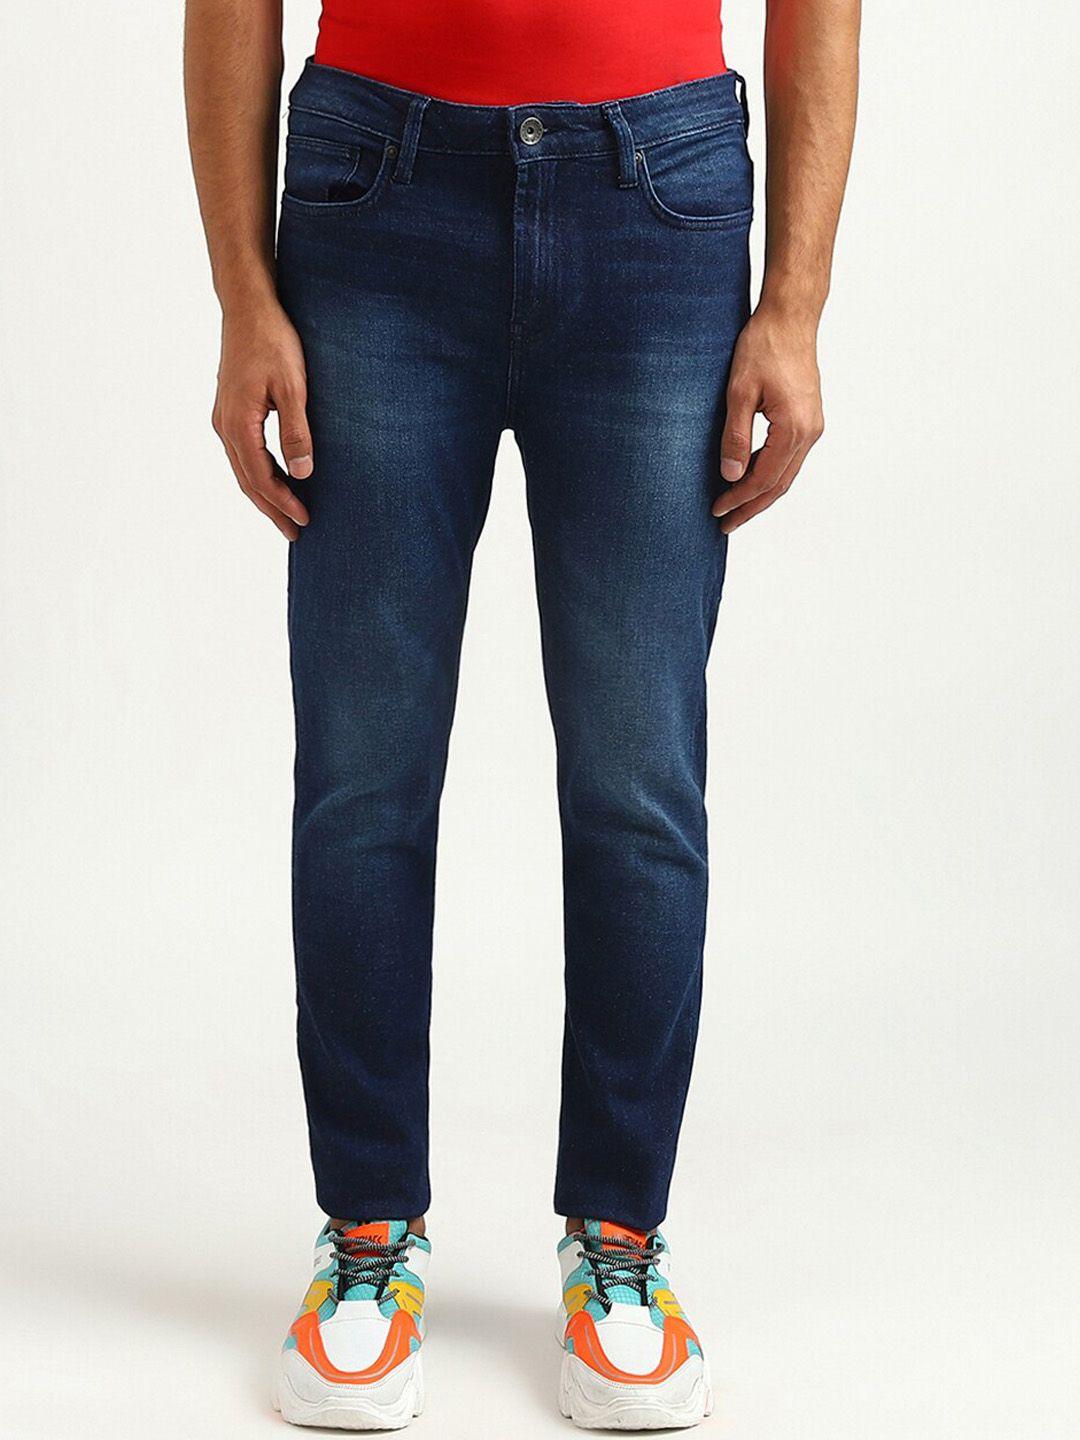 united colors of benetton men navy blue light fade jeans